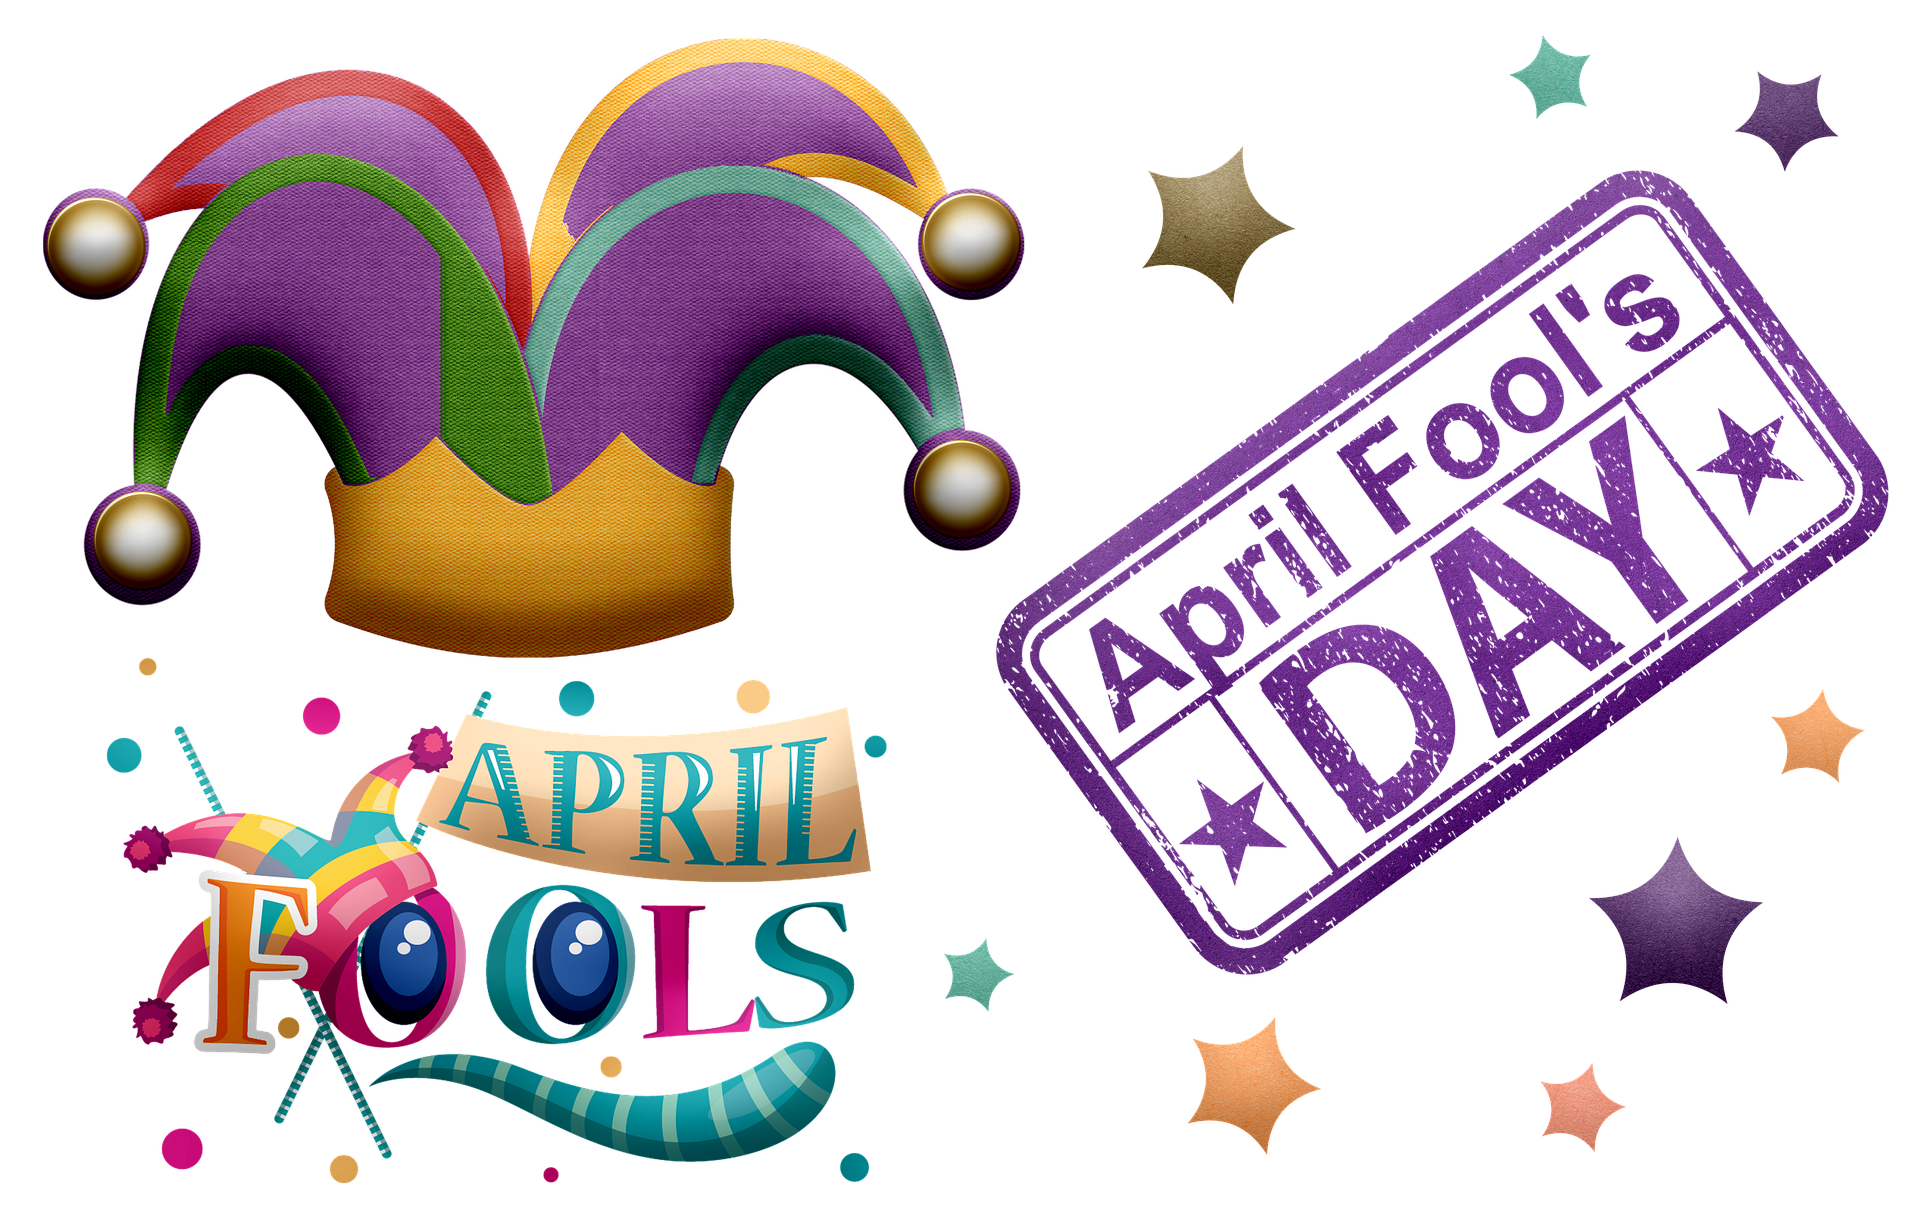 April Fool's Day celebration | Source: Pixabay